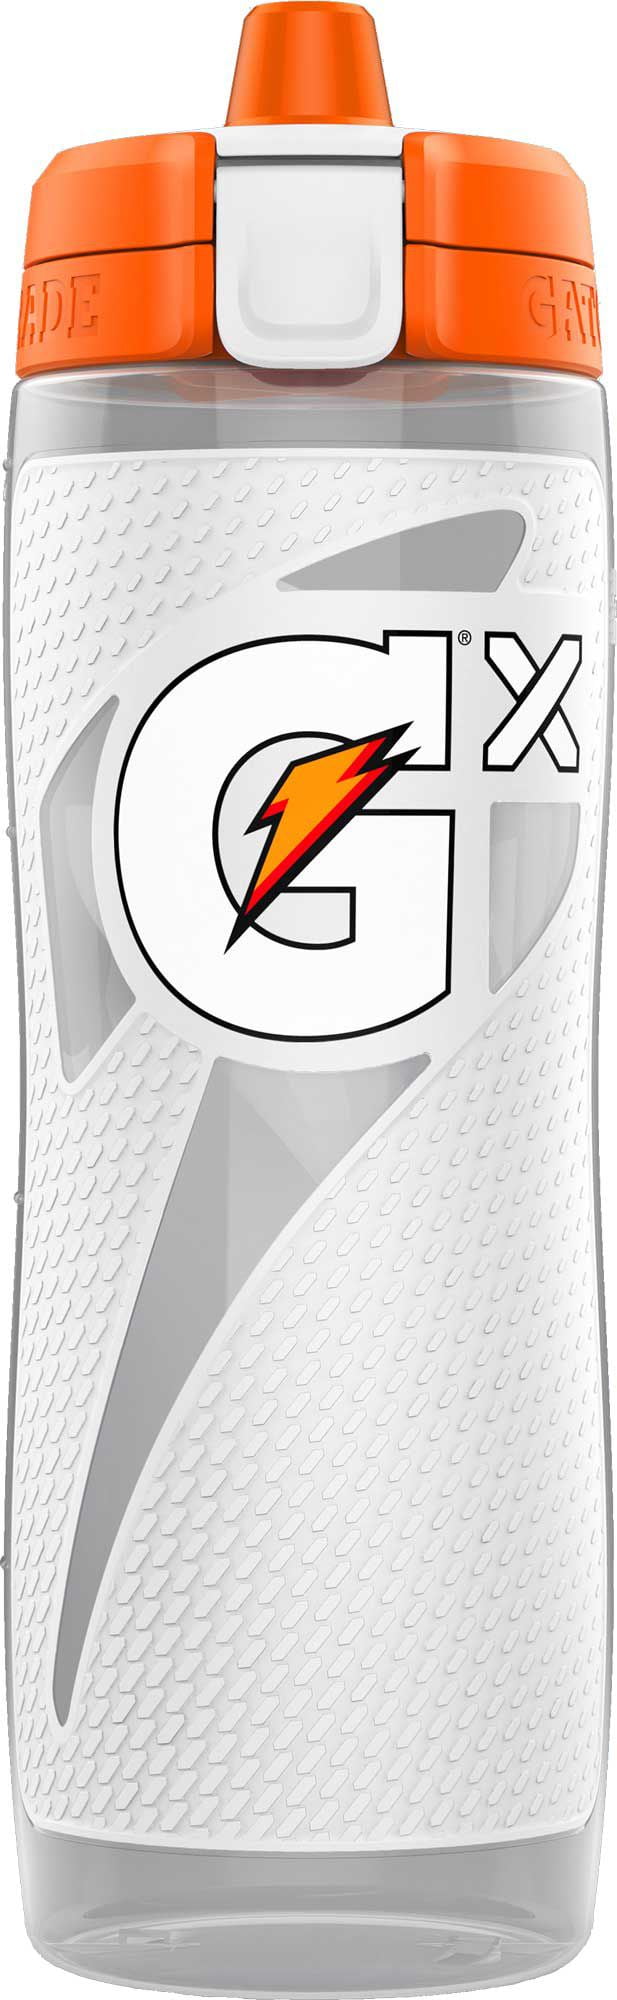 White NEW CASE OF 6 FACTORY BOXED Gatorade GX Sport Water Bottles 30 oz 